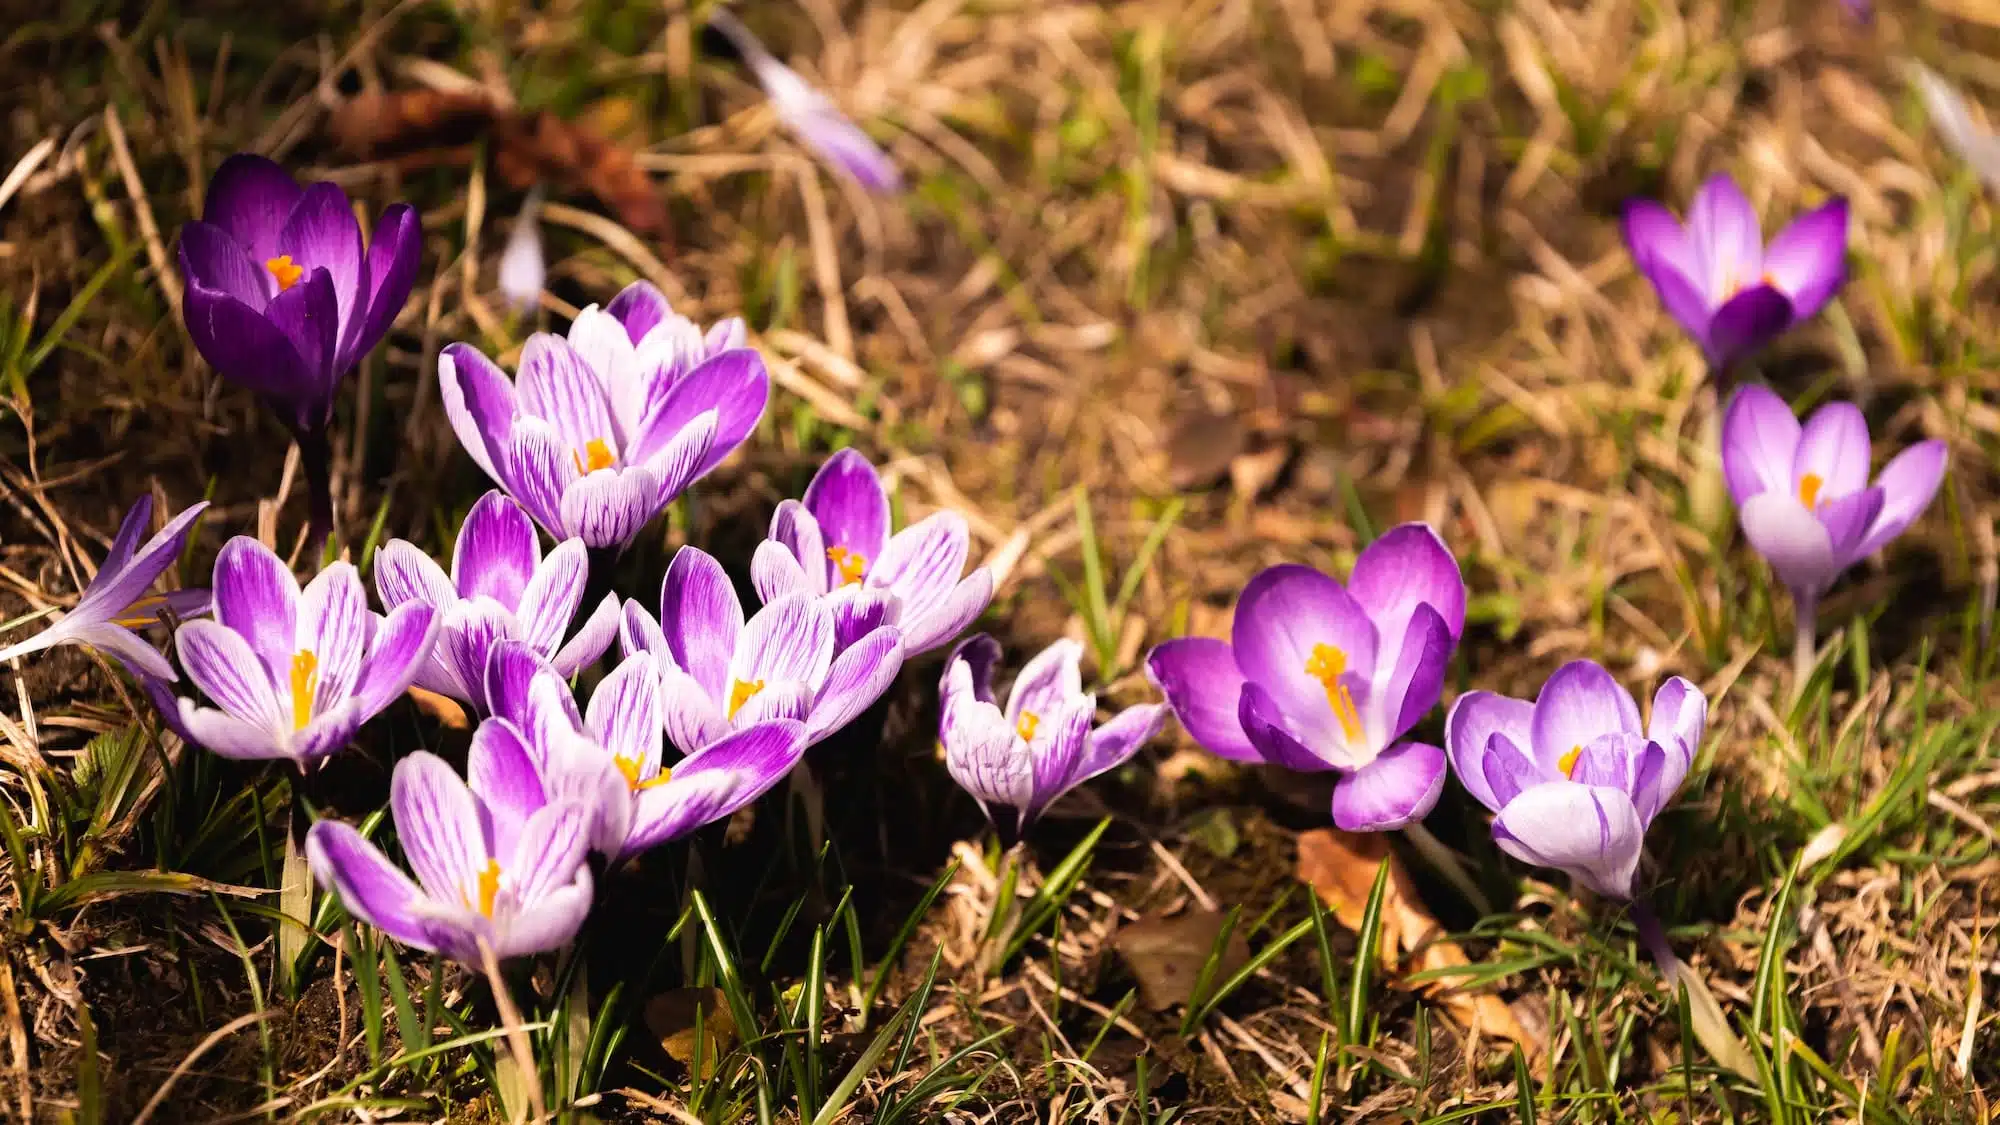 Crocus, plural crocuses or croci is a genus of flowering plants in the iris family. A bunch of